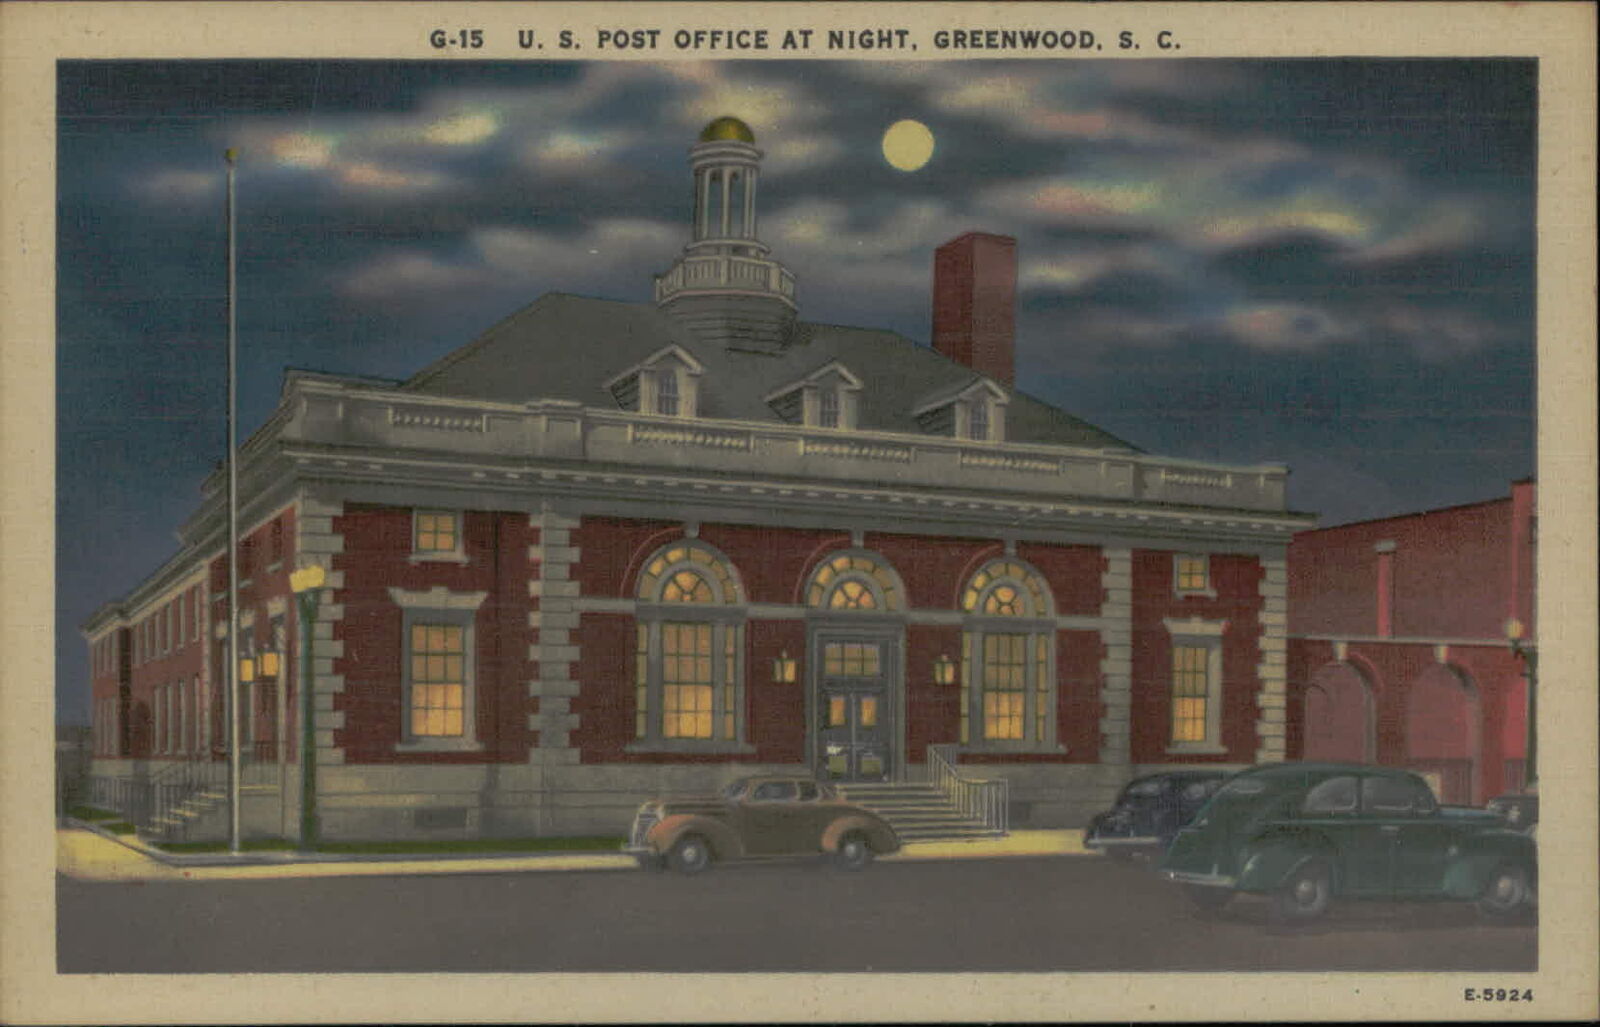 Postcard: G-15 U.S. POST OFFICE AT NIGHT, GREENWOOD, S. C. E-5924